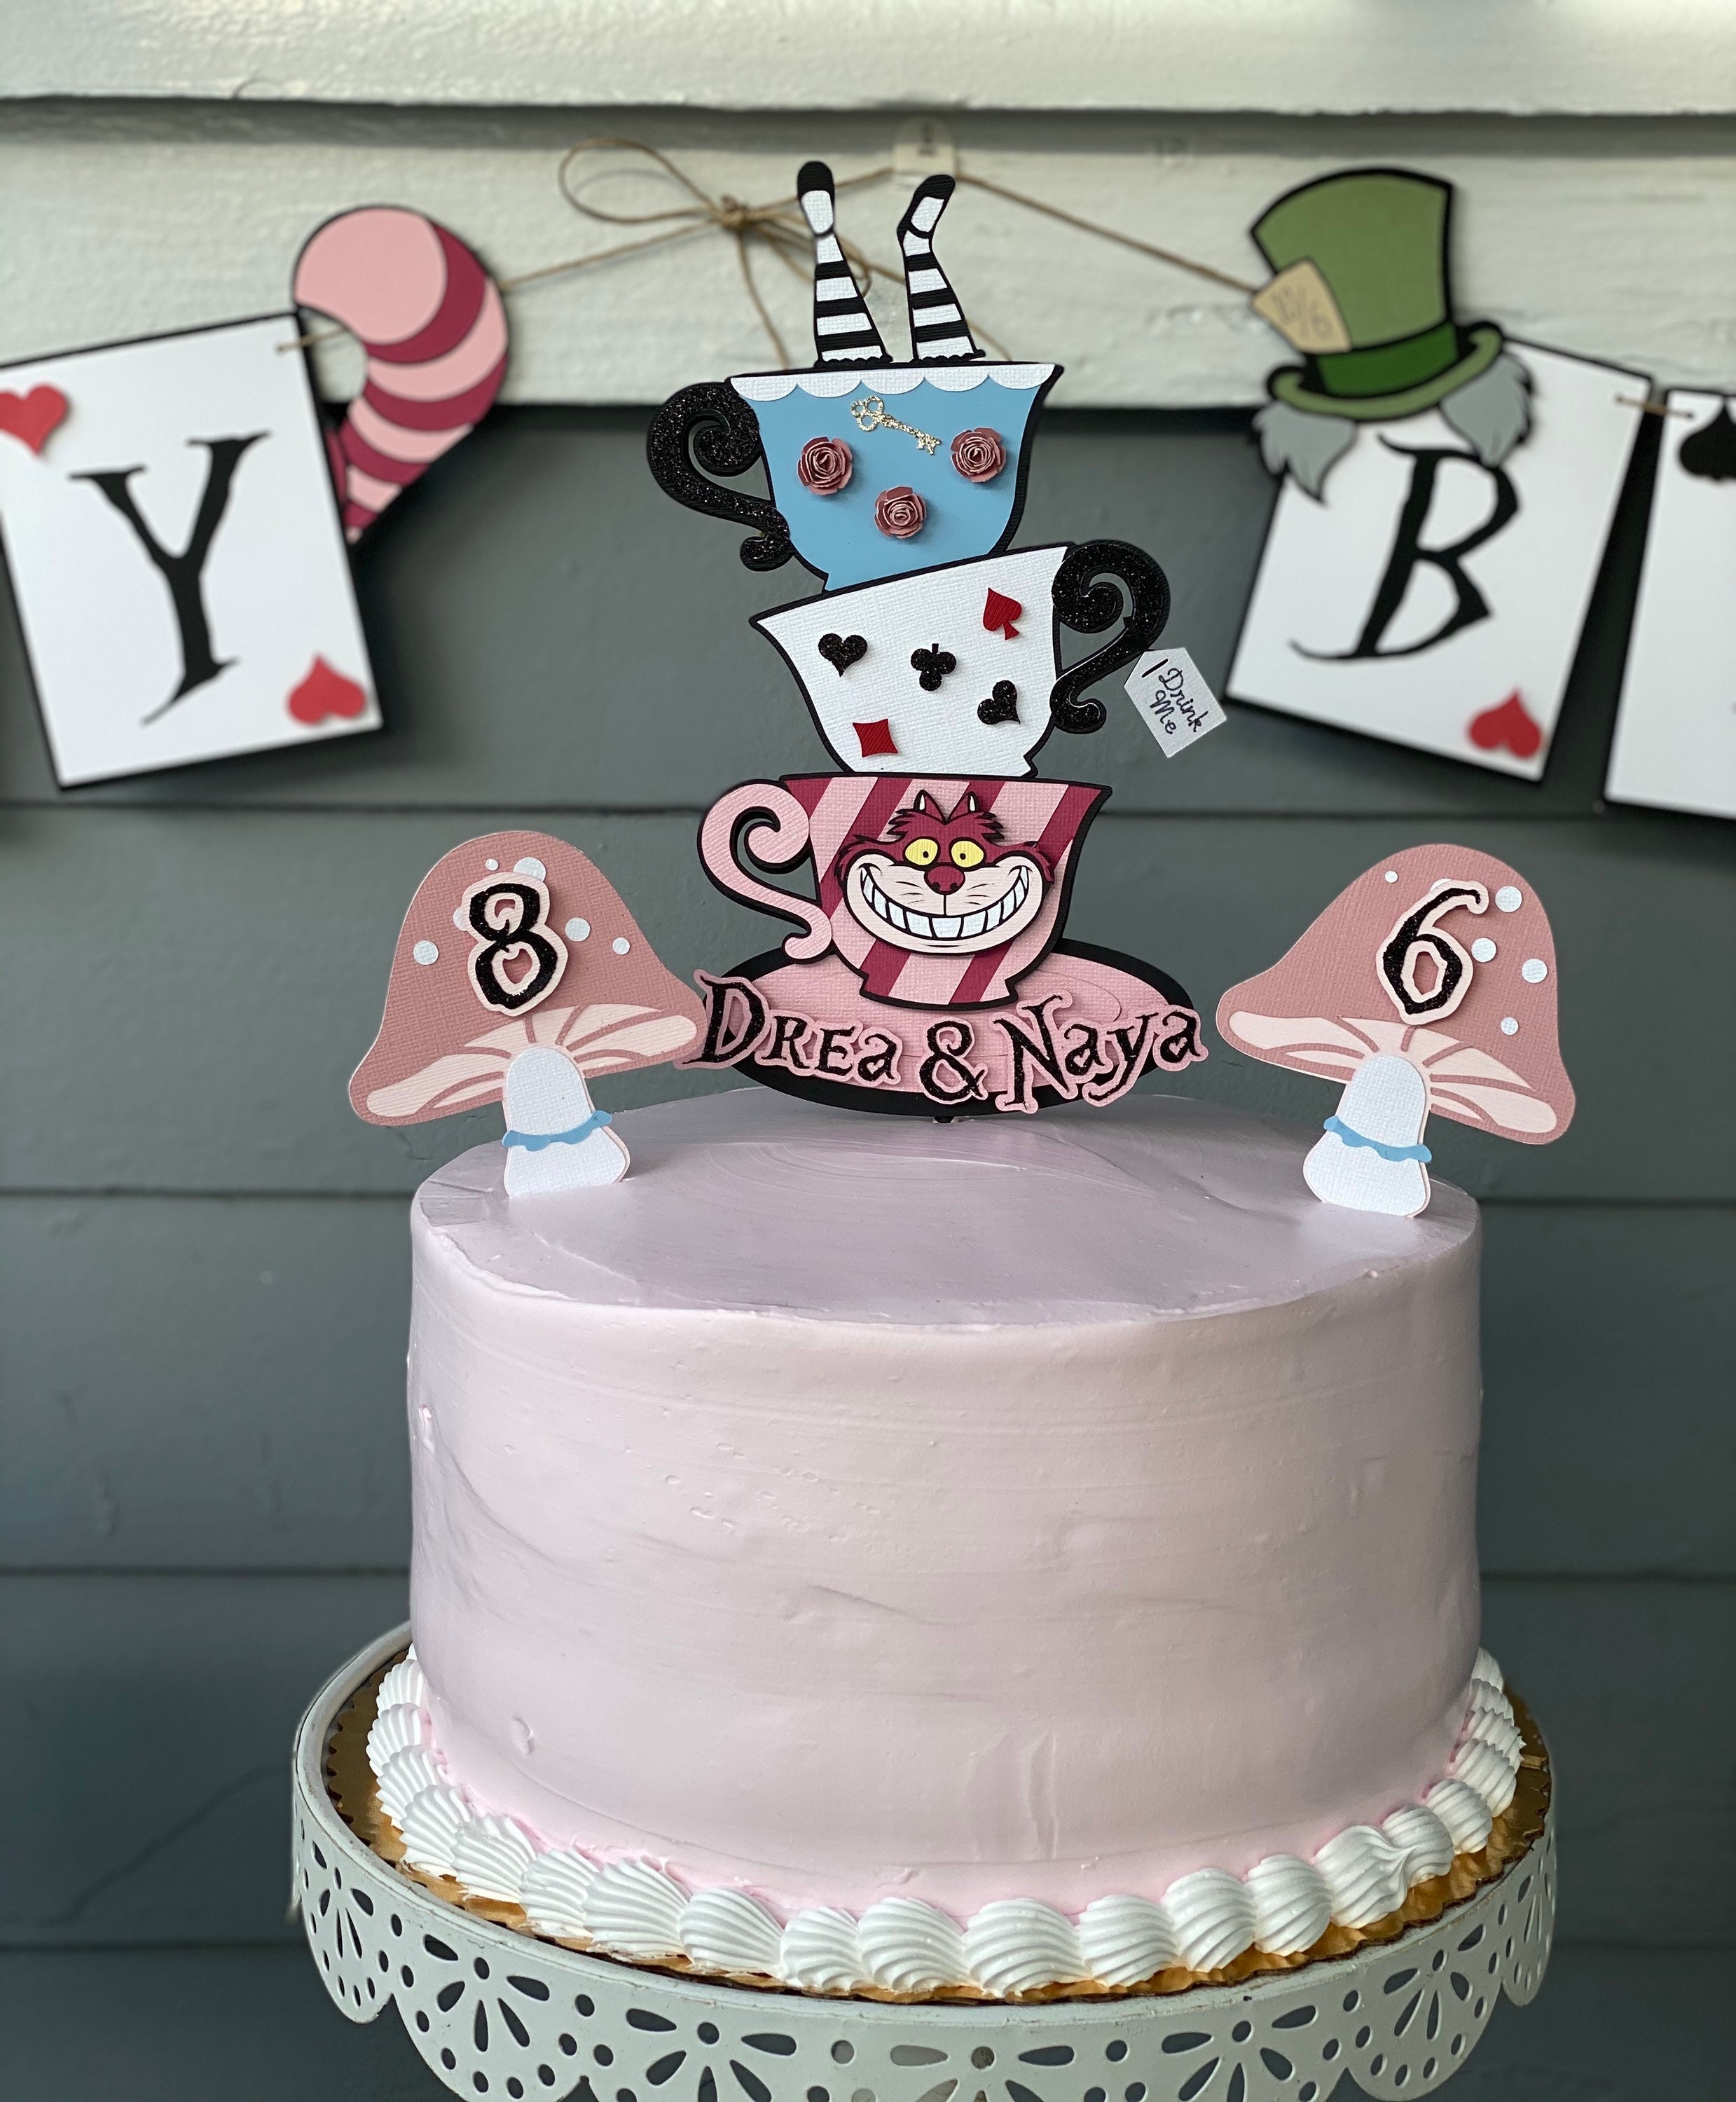 Disney Alice in Wonderland Birthday Cake Topper Set Avec Décorative Accessoires 